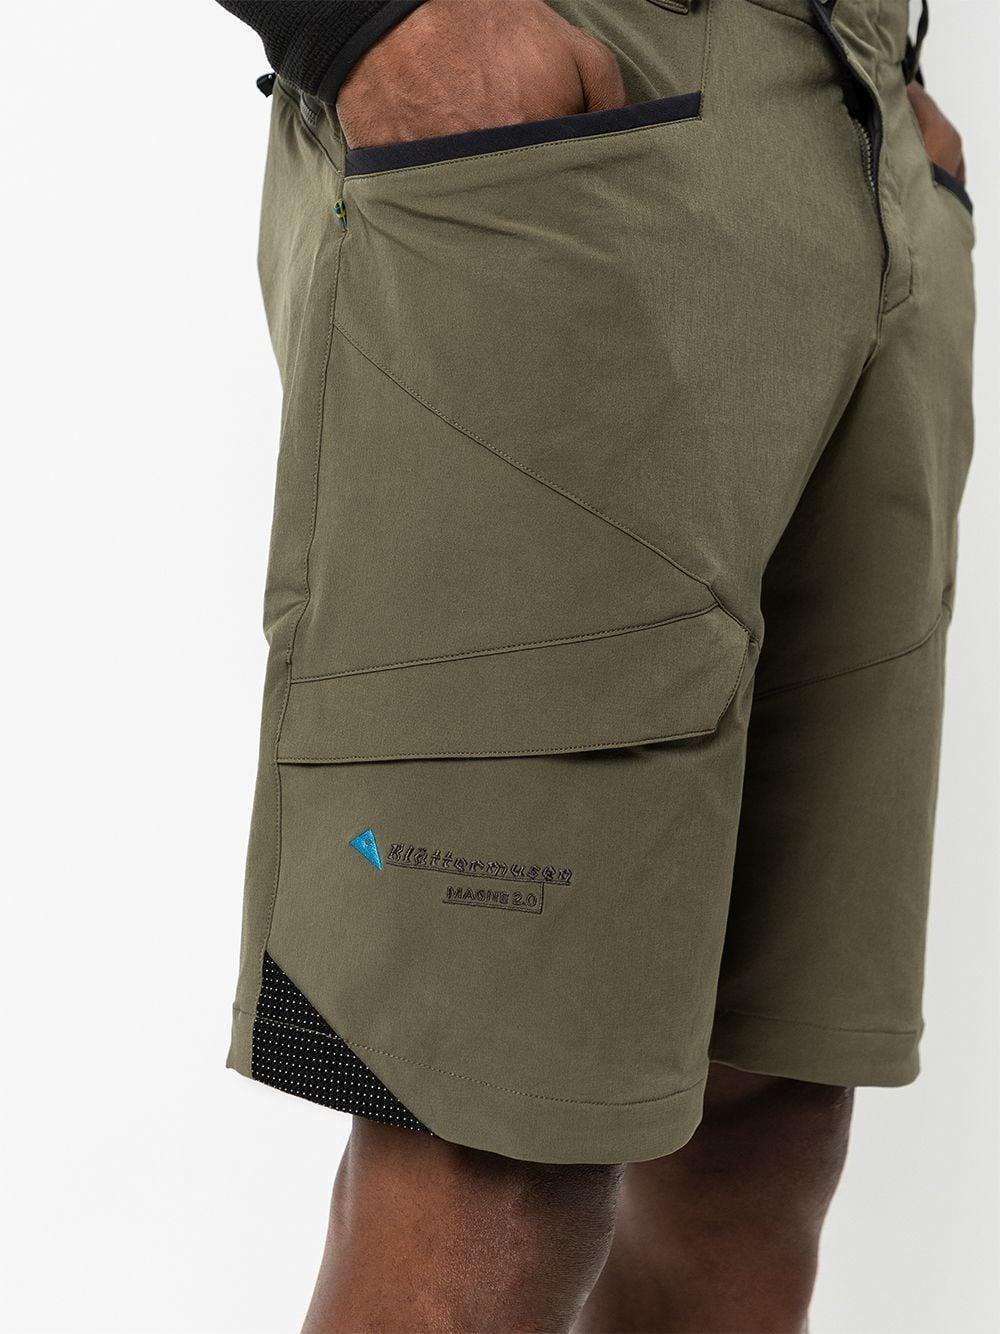 Klättermusen Synthetic Magne 2 Trail Shorts in Green for Men - Lyst